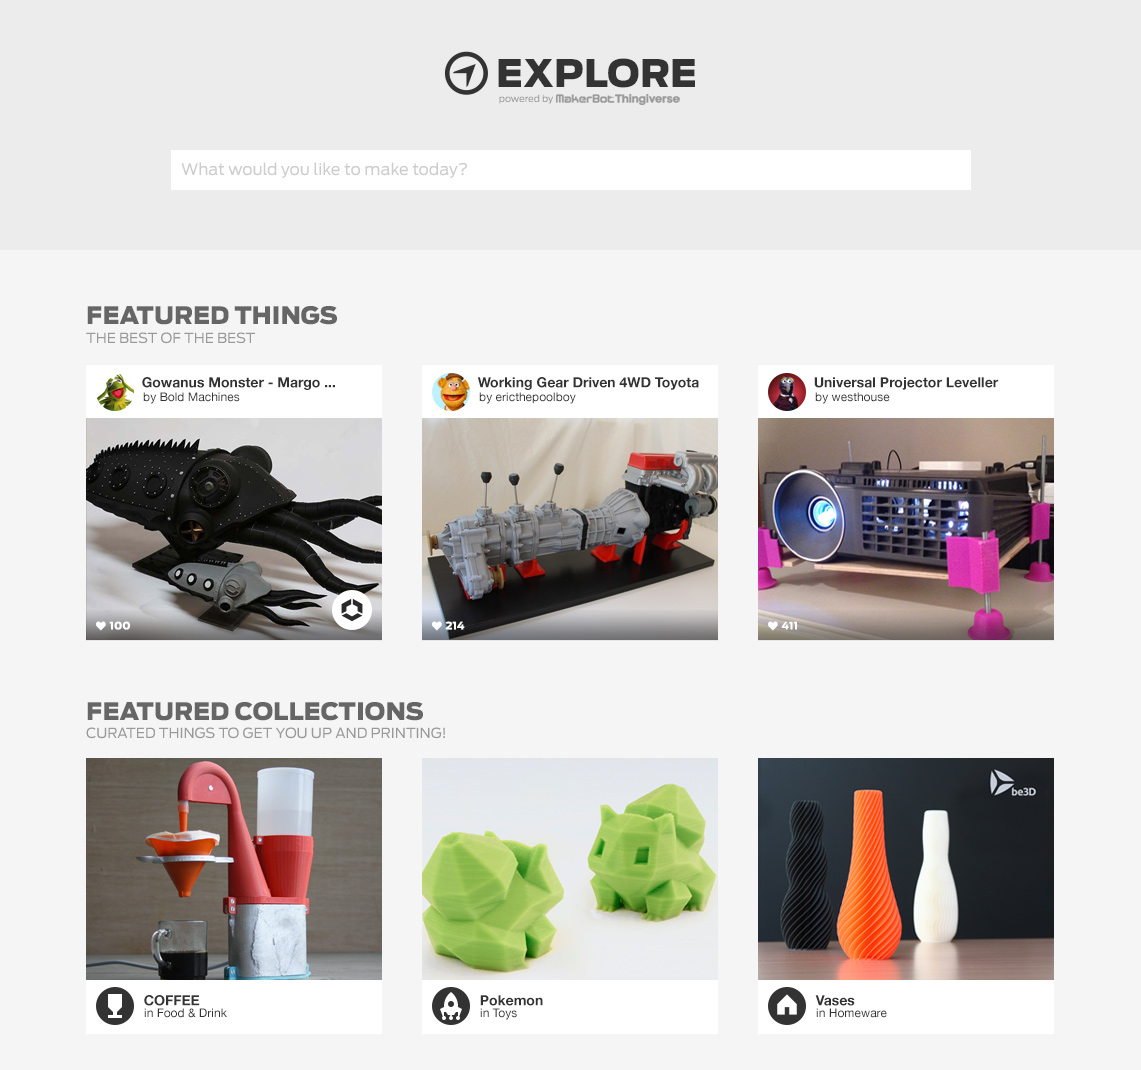 MakerBot Explore